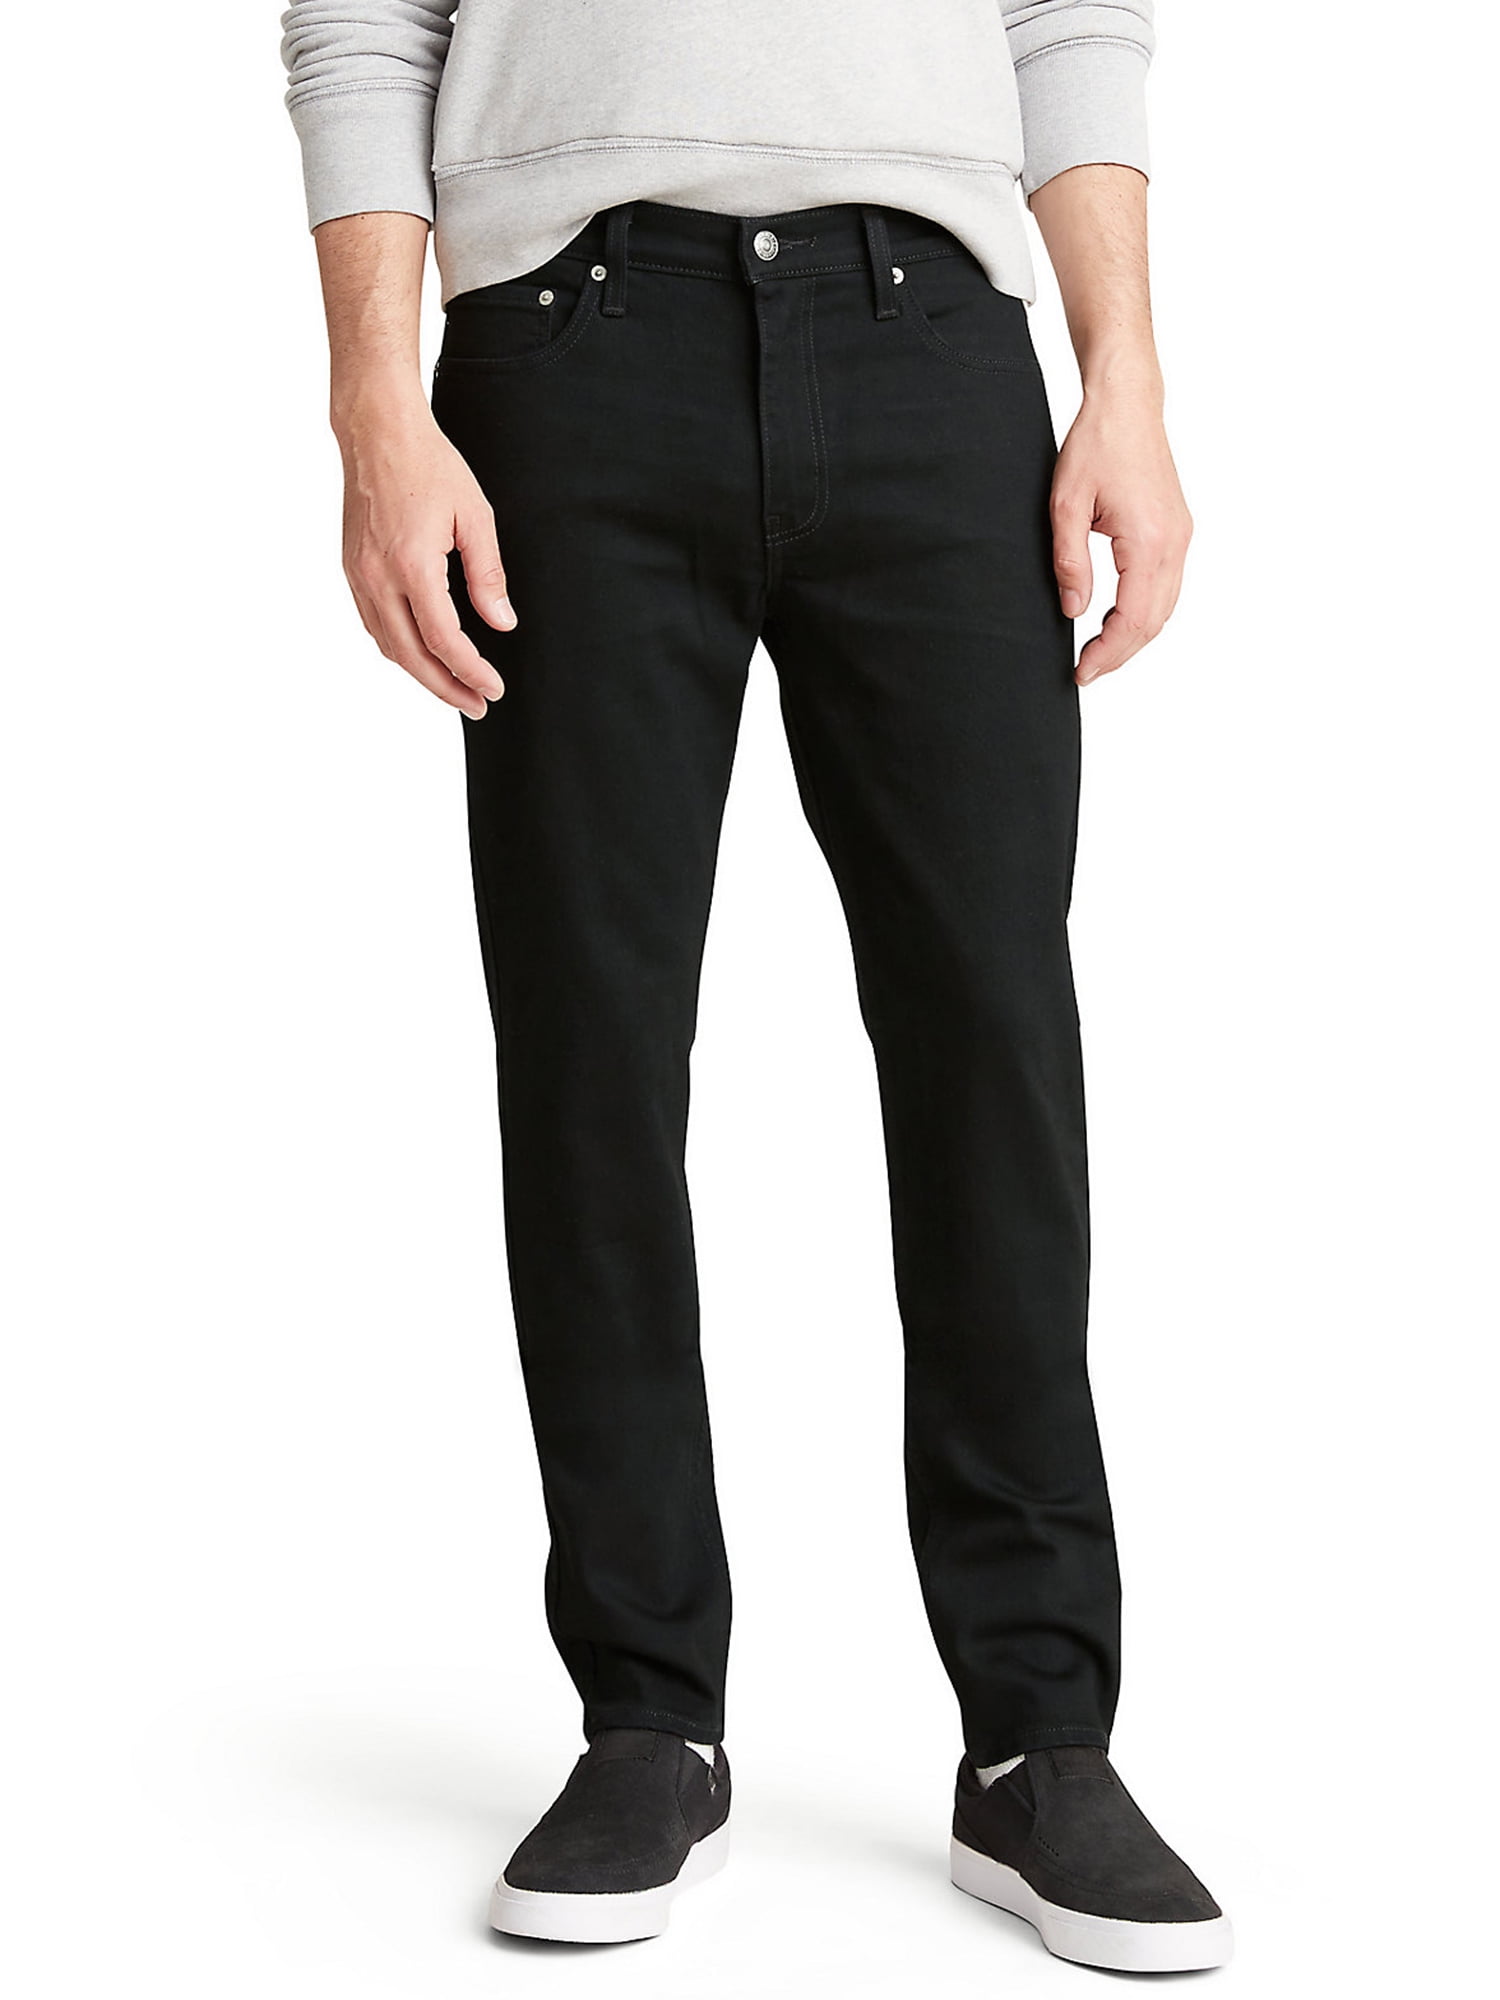 by Levi Strauss & Co. Men's and Big Men's Slim Jeans - Walmart.com